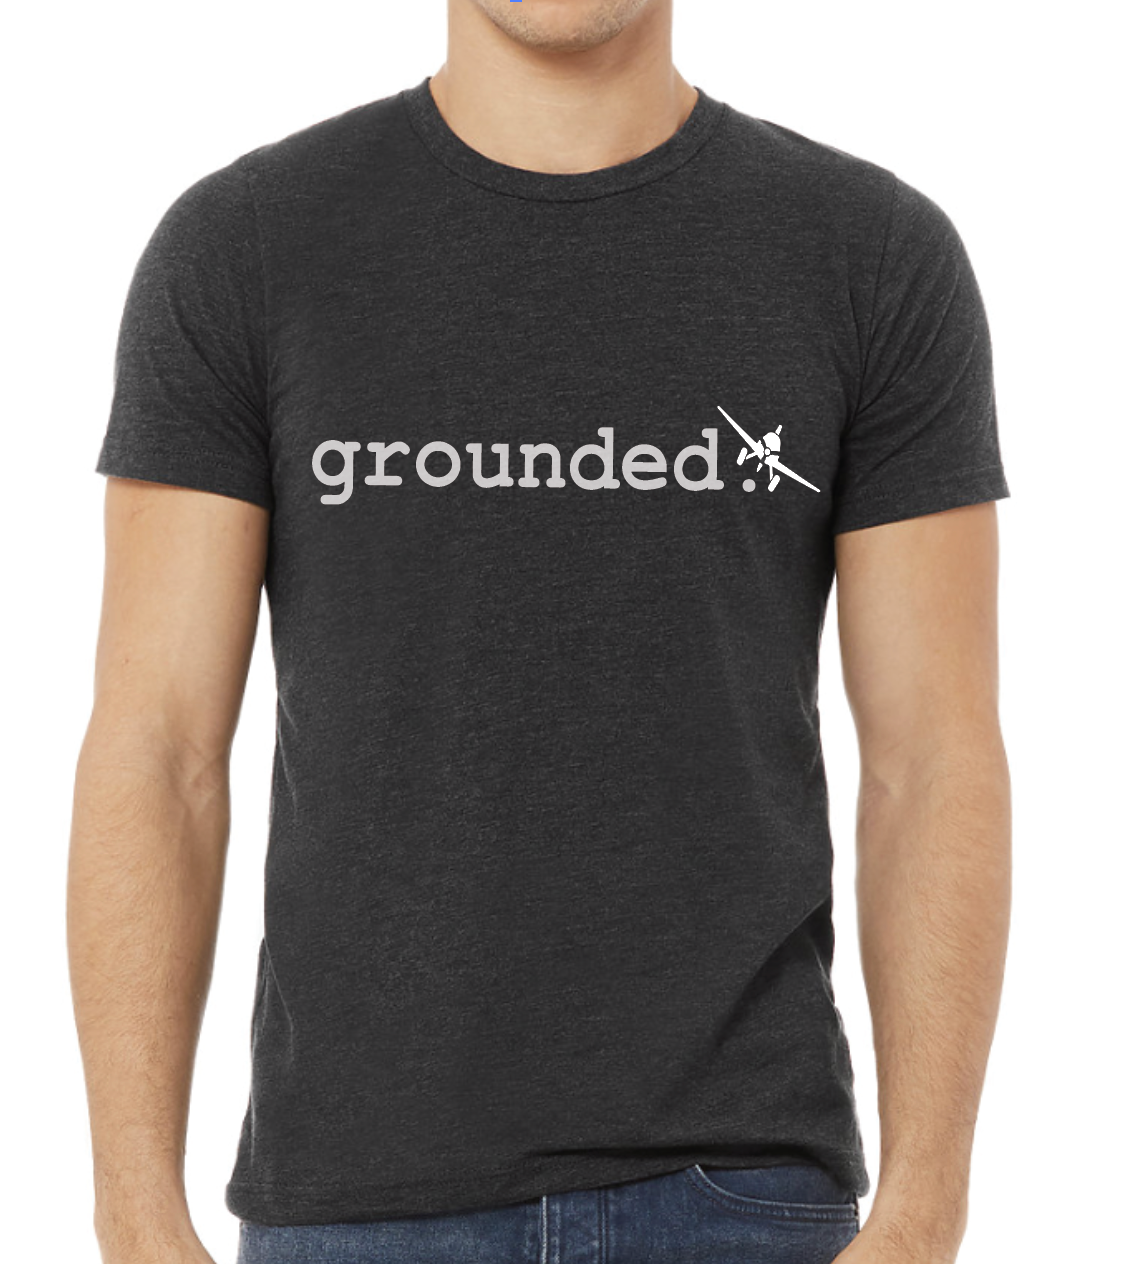 grounded. - Unisex T-Shirt - Dark Heather